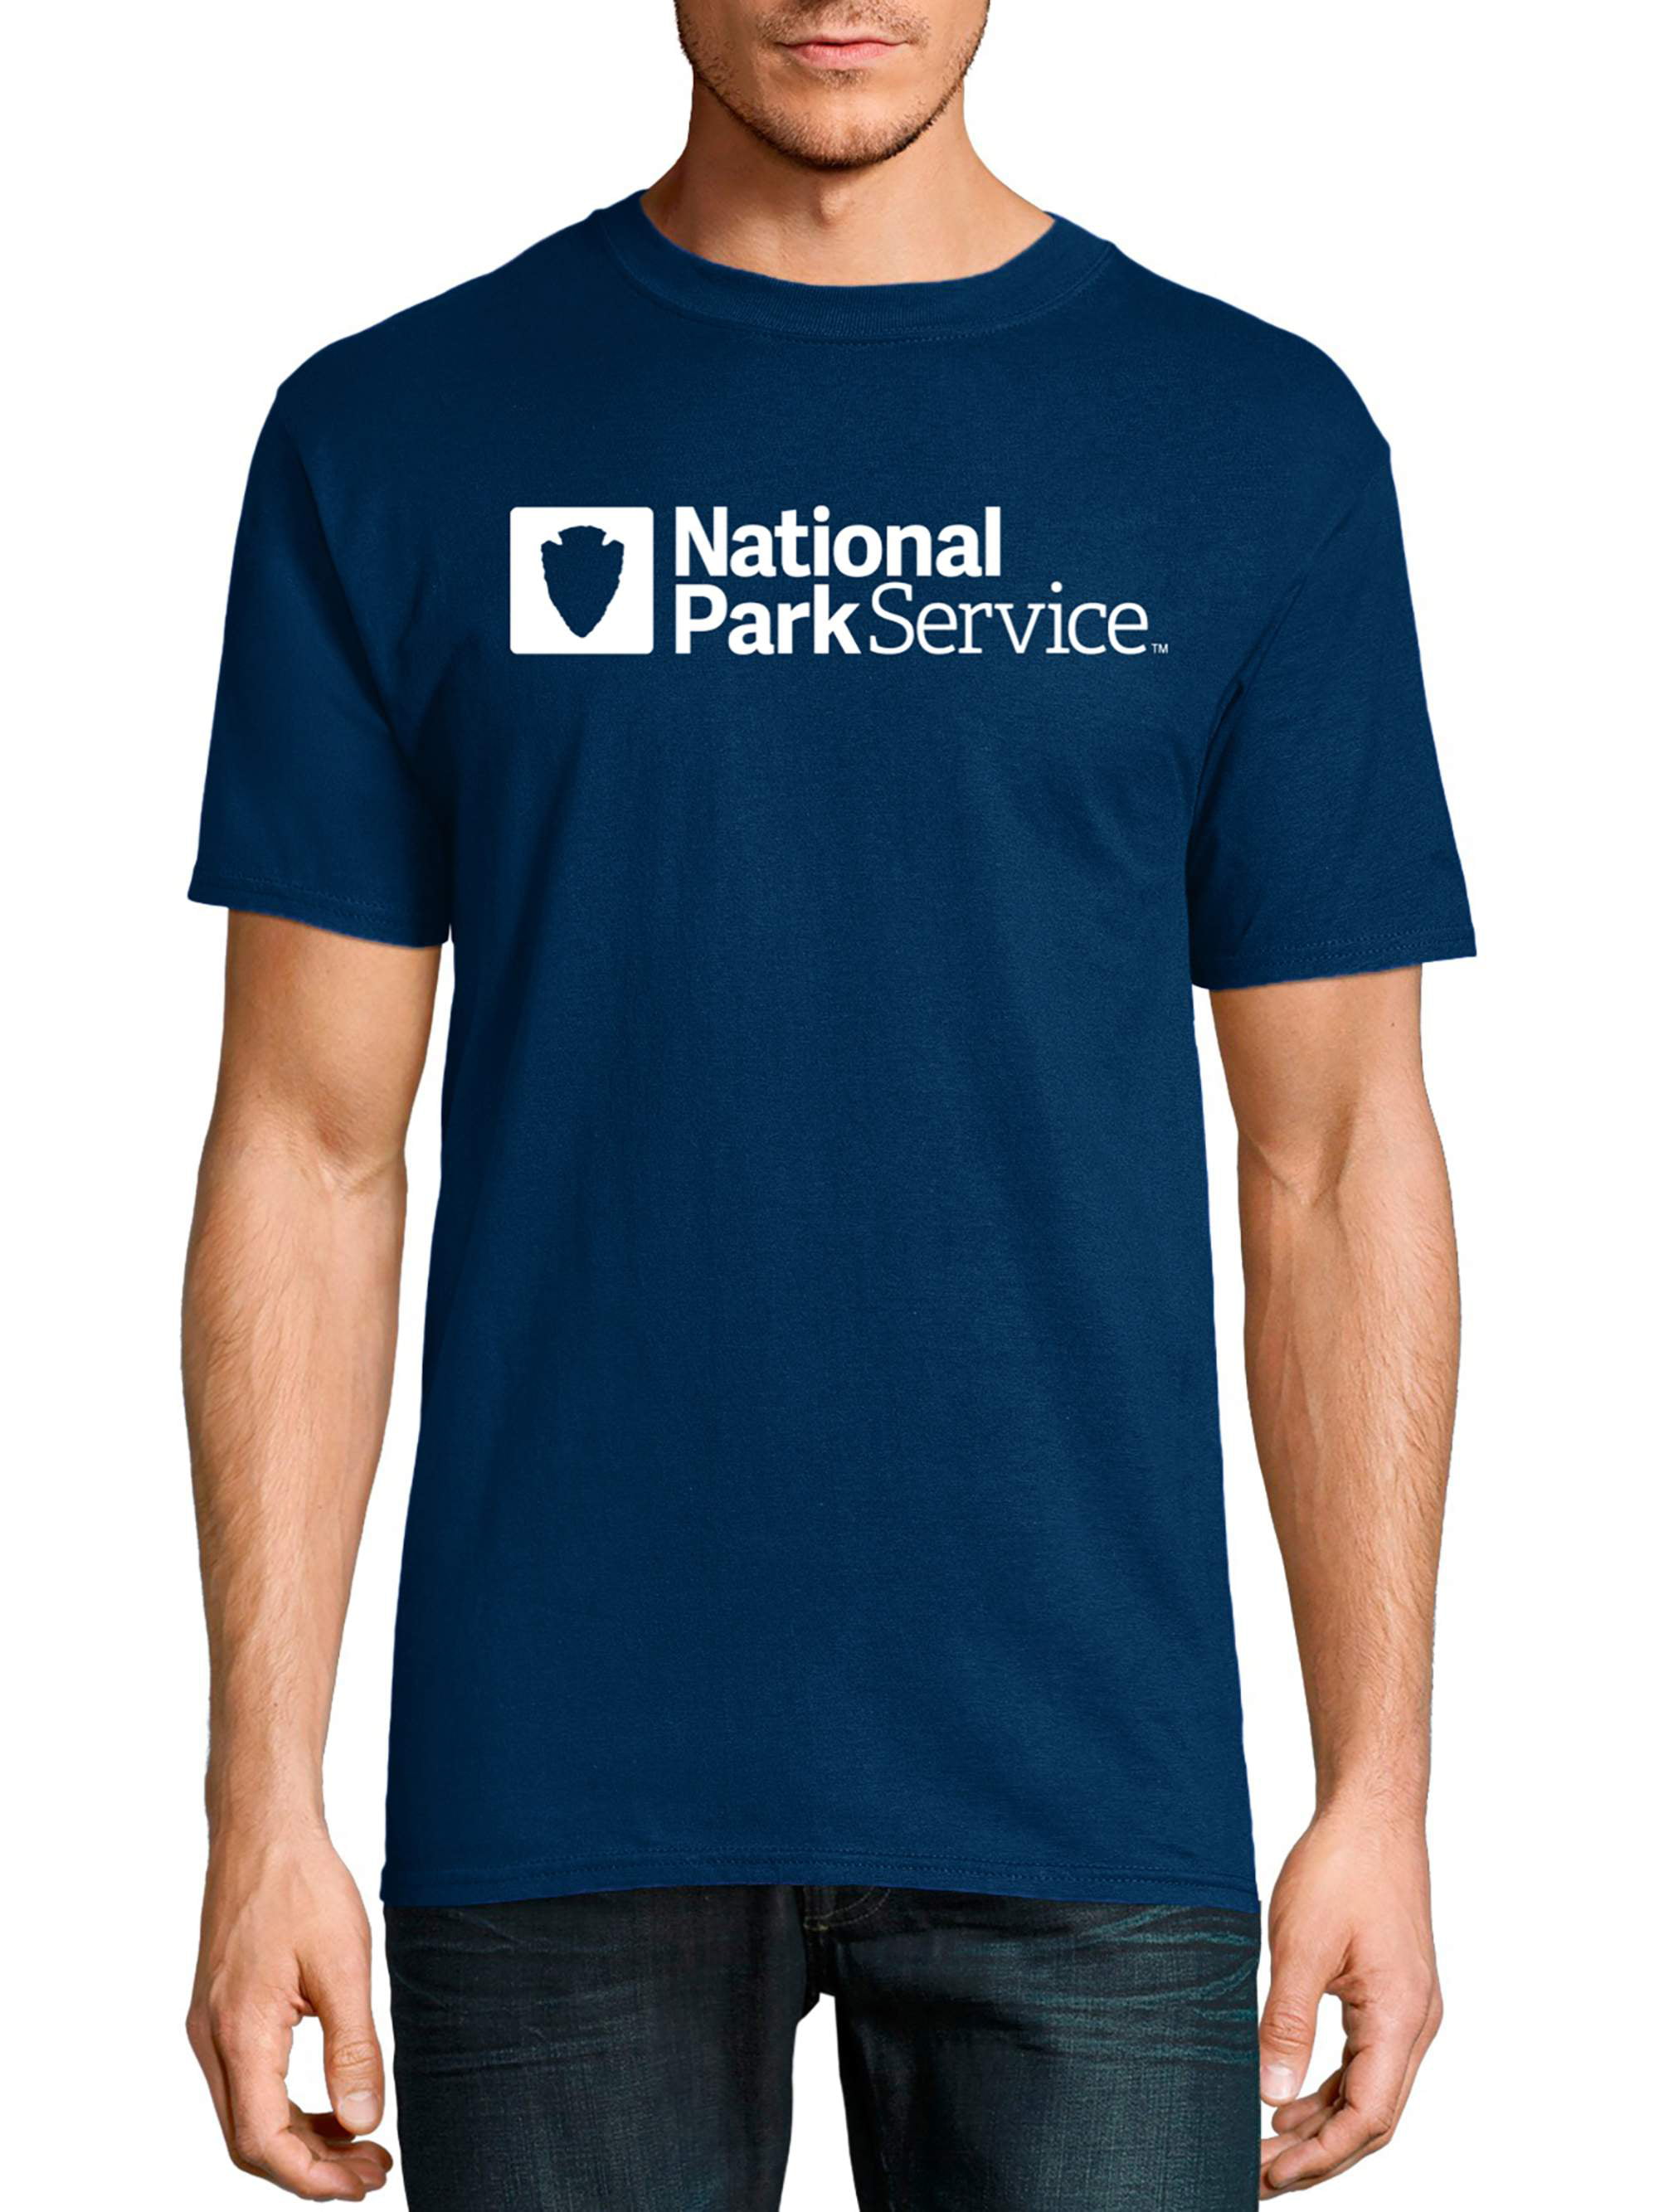 Hanes National Park Service Graphic Tee Shirt Navy Blue Men/'s Size Medium-3XL